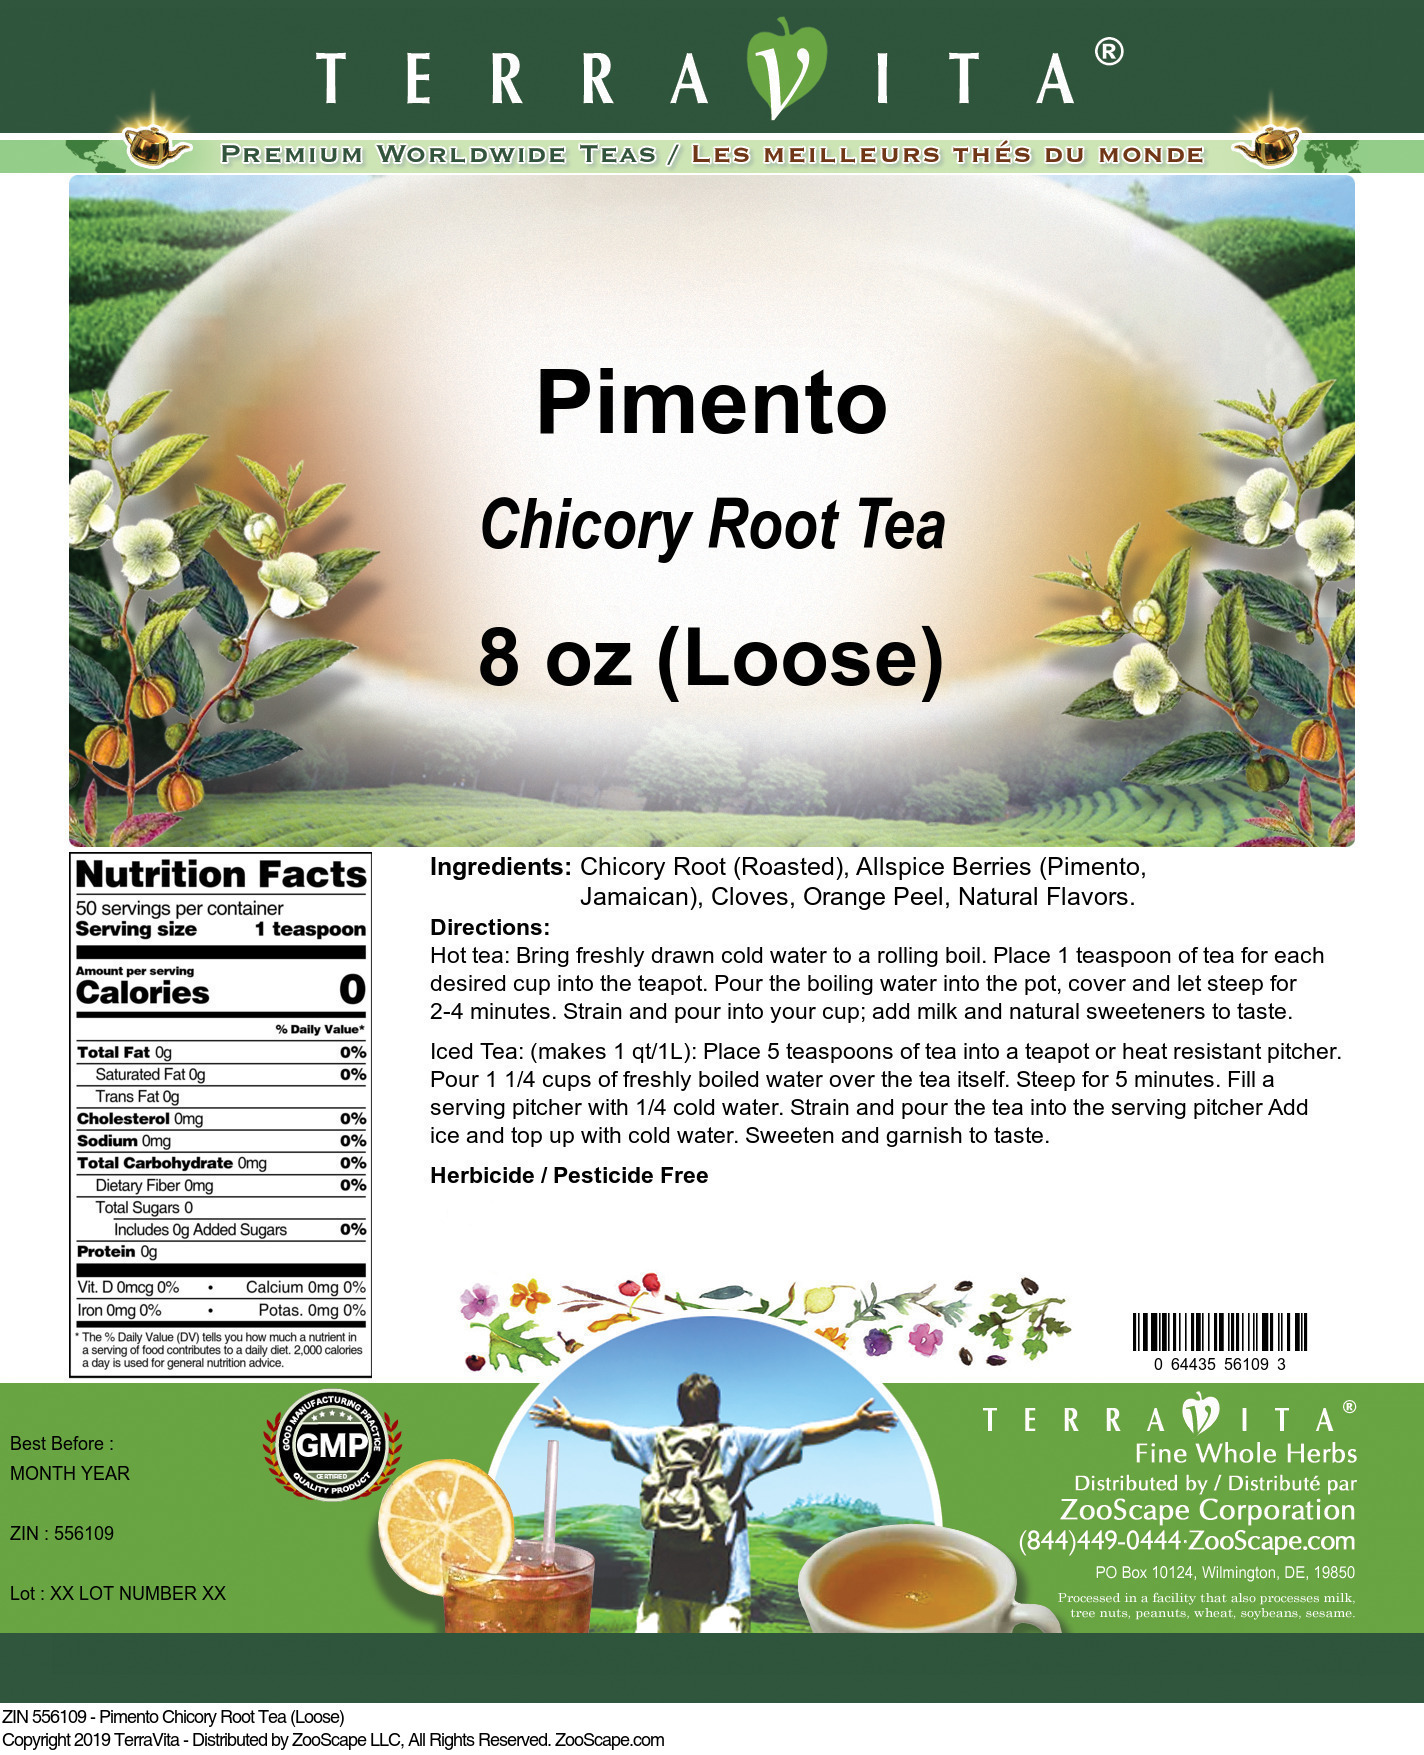 Pimento Chicory Root Tea (Loose) - Label